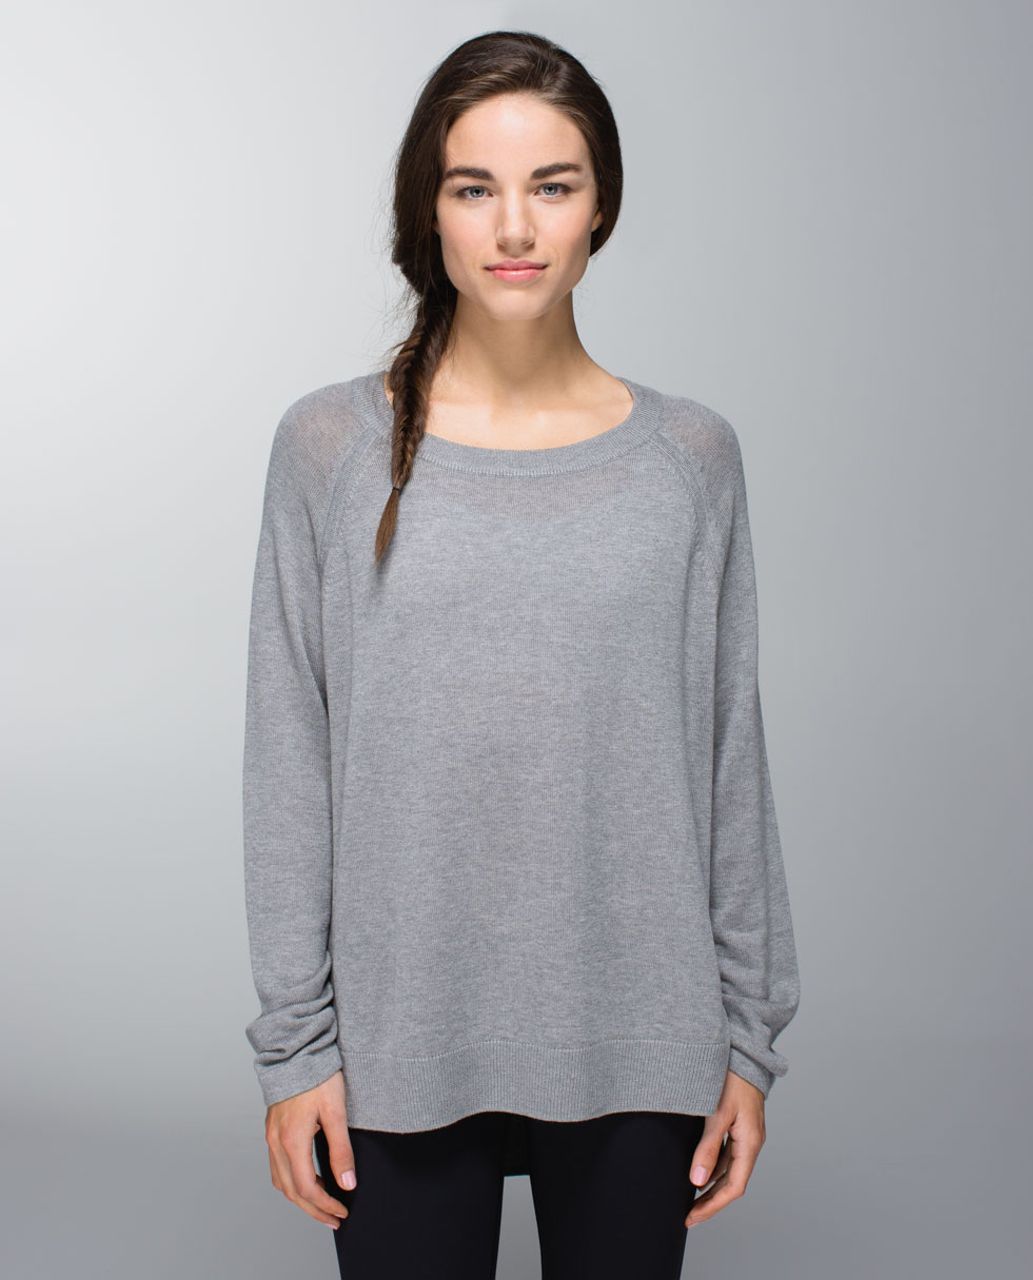 lululemon pullover sweater